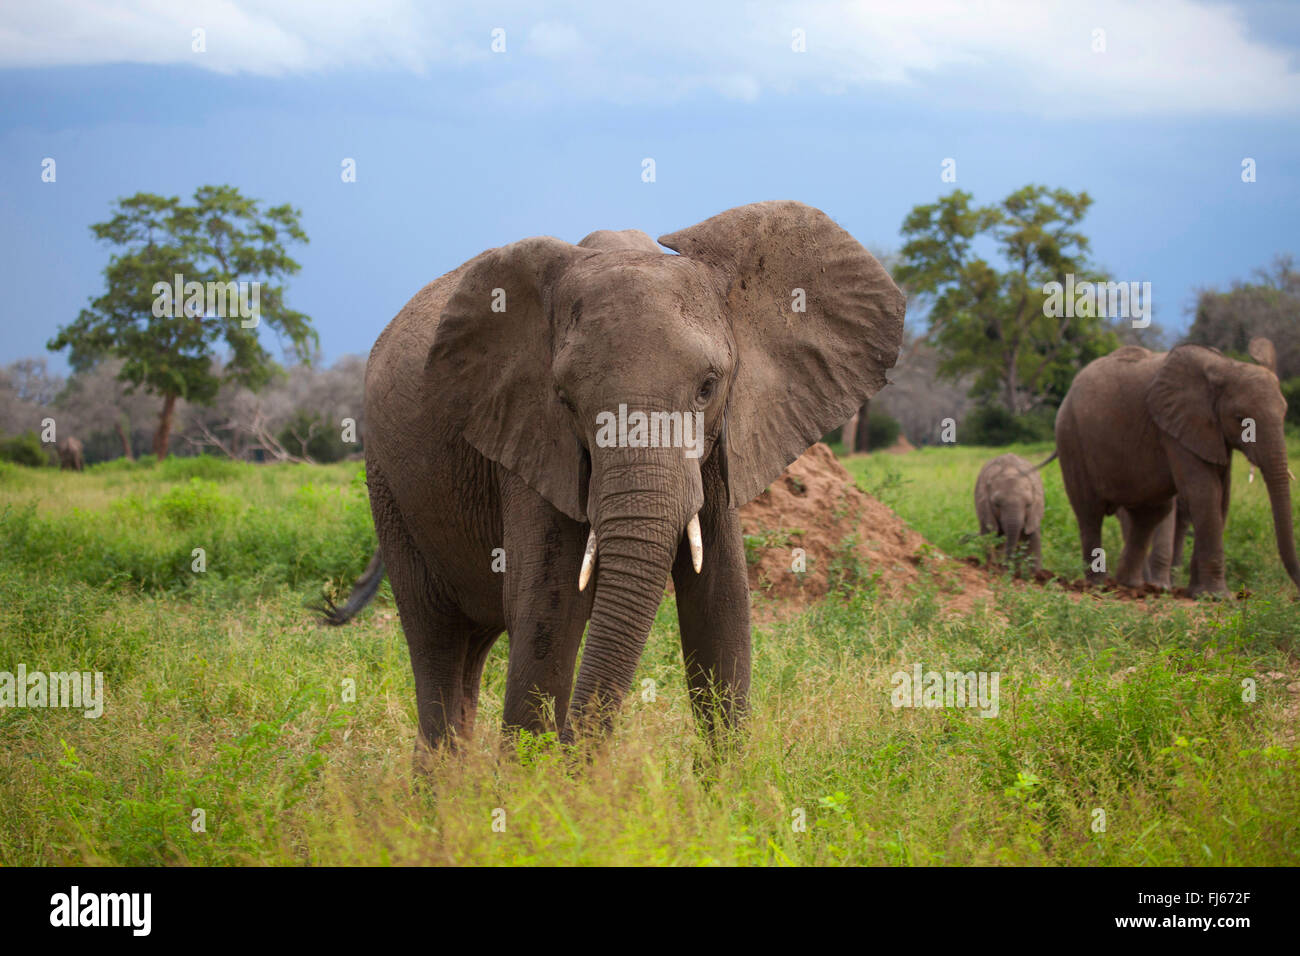 African elephant (Loxodonta africana), elephant family in the savannah, South Africa Stock Photo